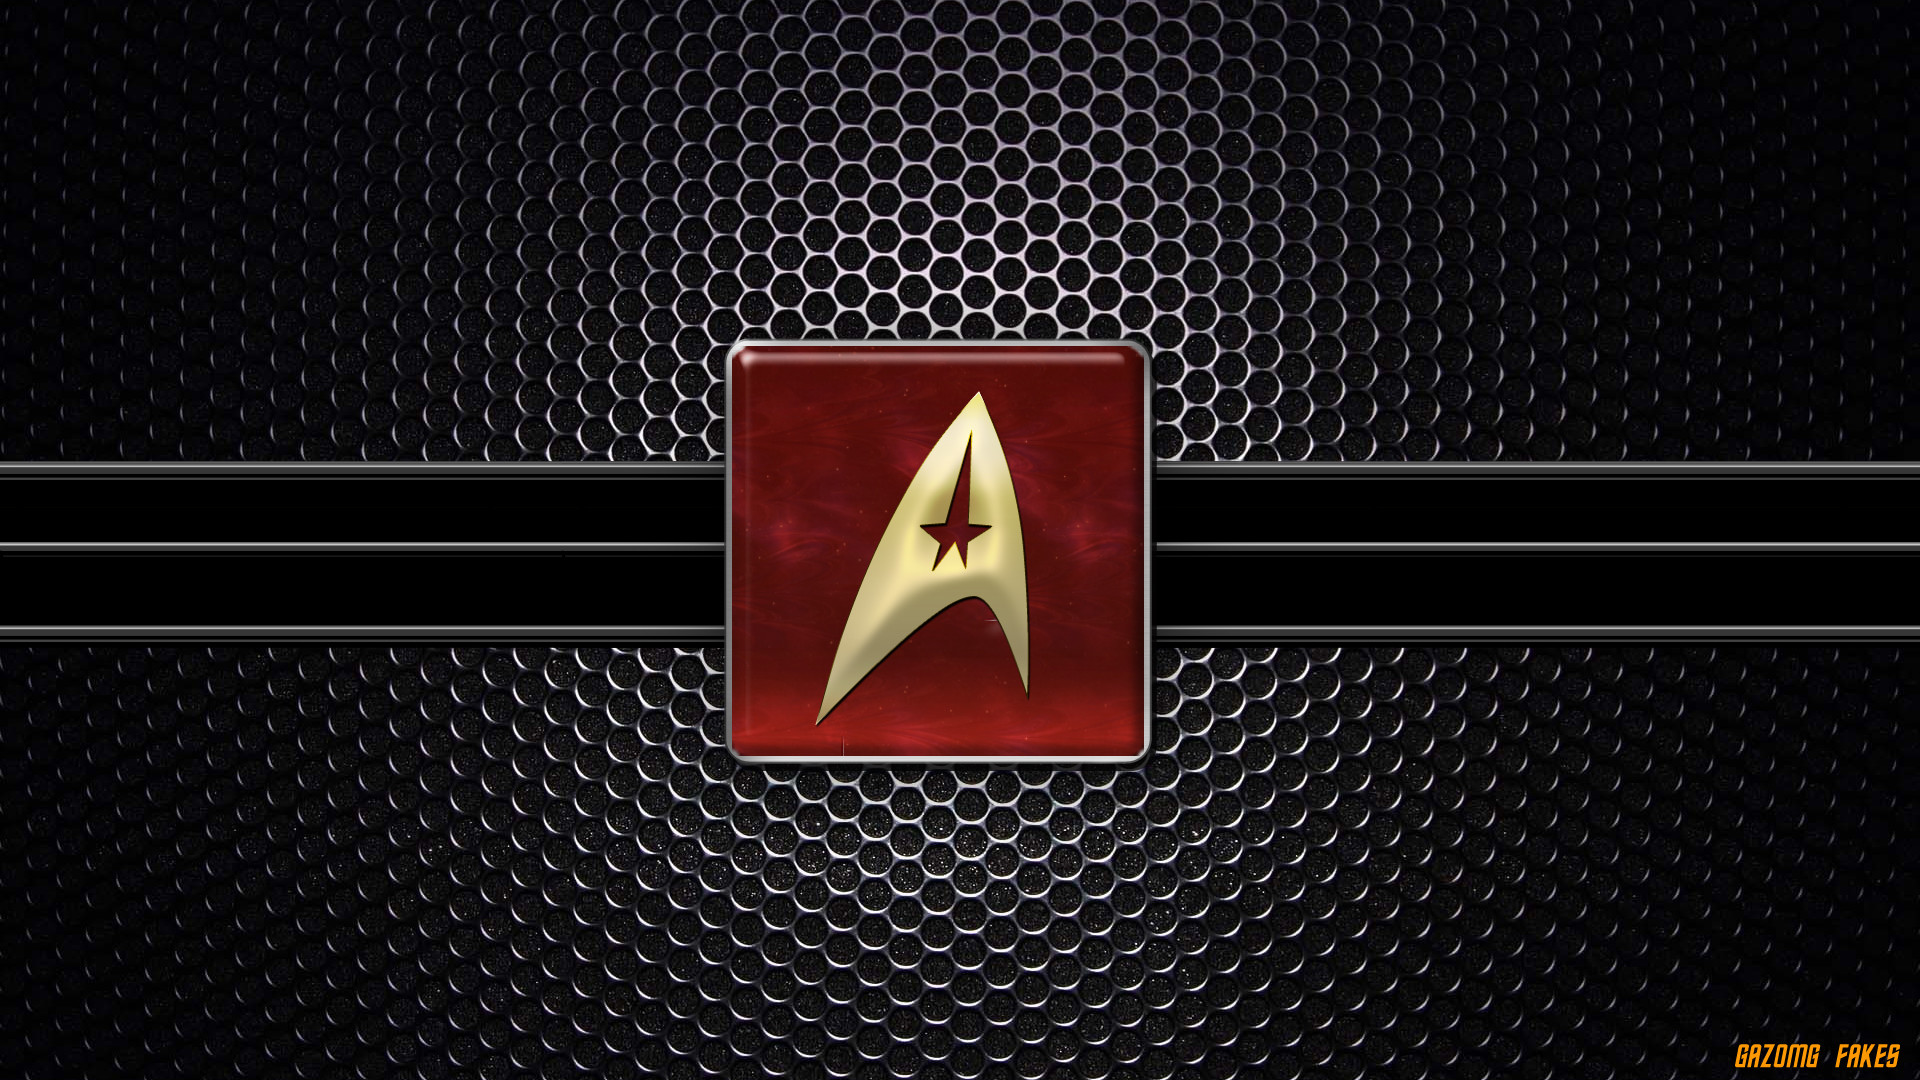 1920x1080 Starfleet logo Wallpaper by gazomg on DeviantArt